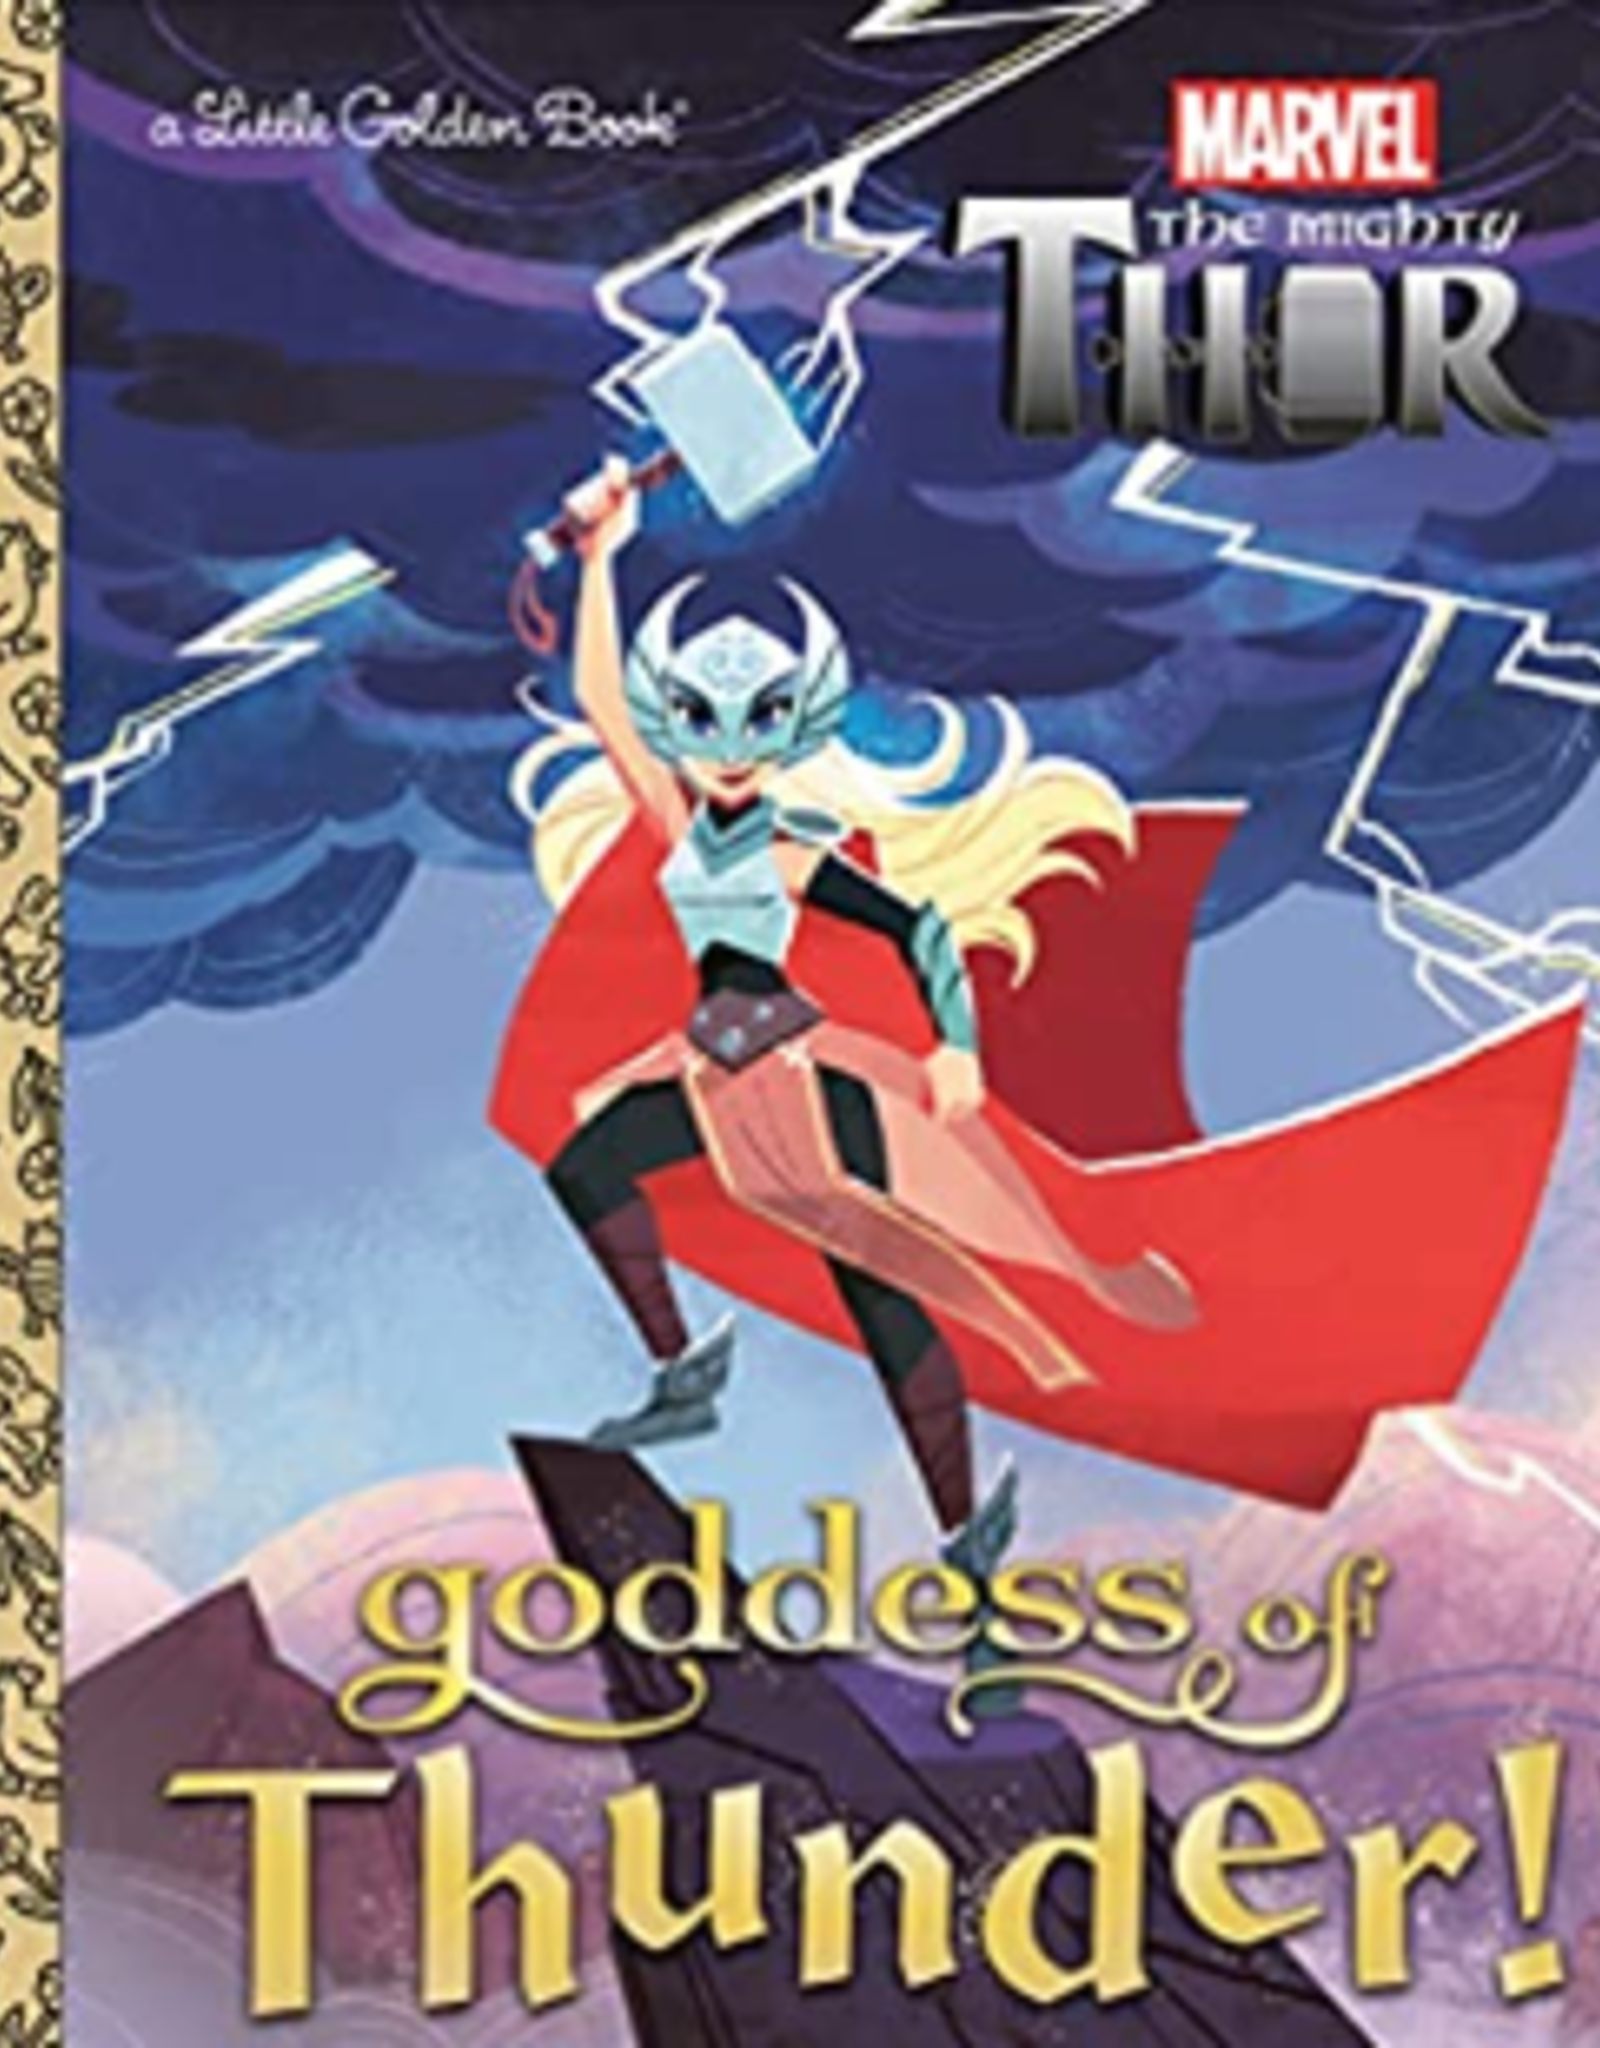 A Little Golden Book A Little Golden Book Marvel the Mighty Thor Goddess of Thunder!